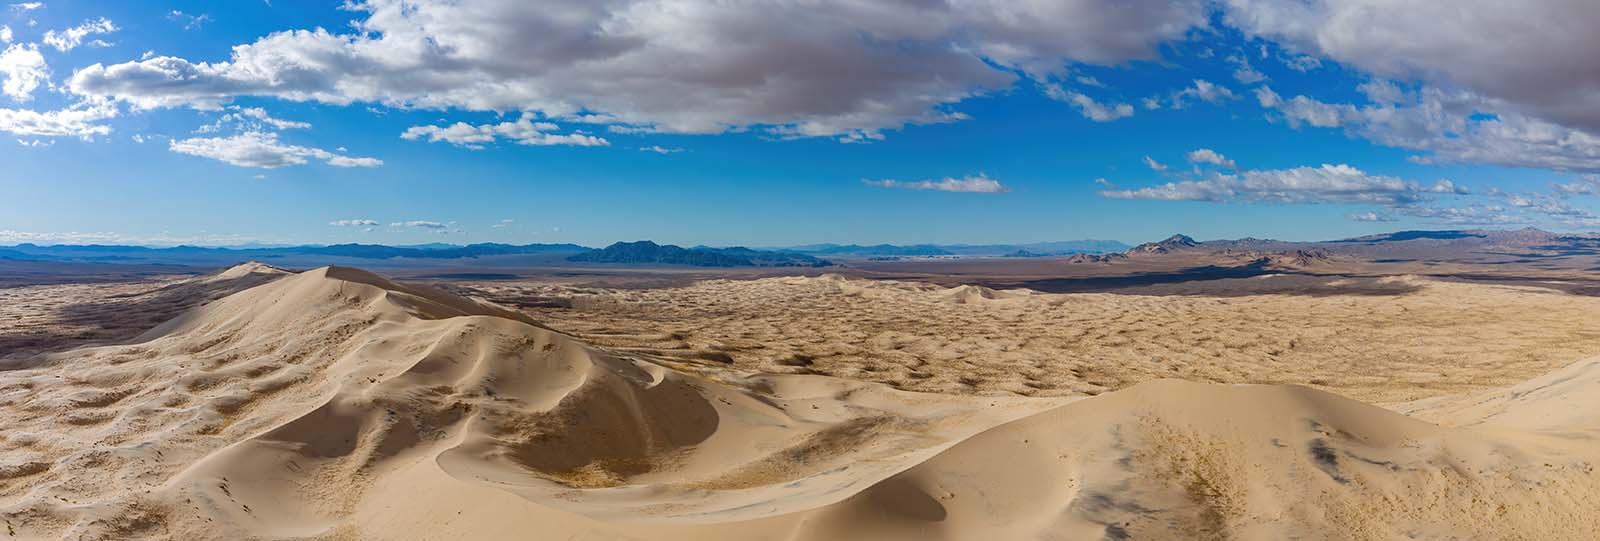 Kelso dunes, Mojave National Preserve.